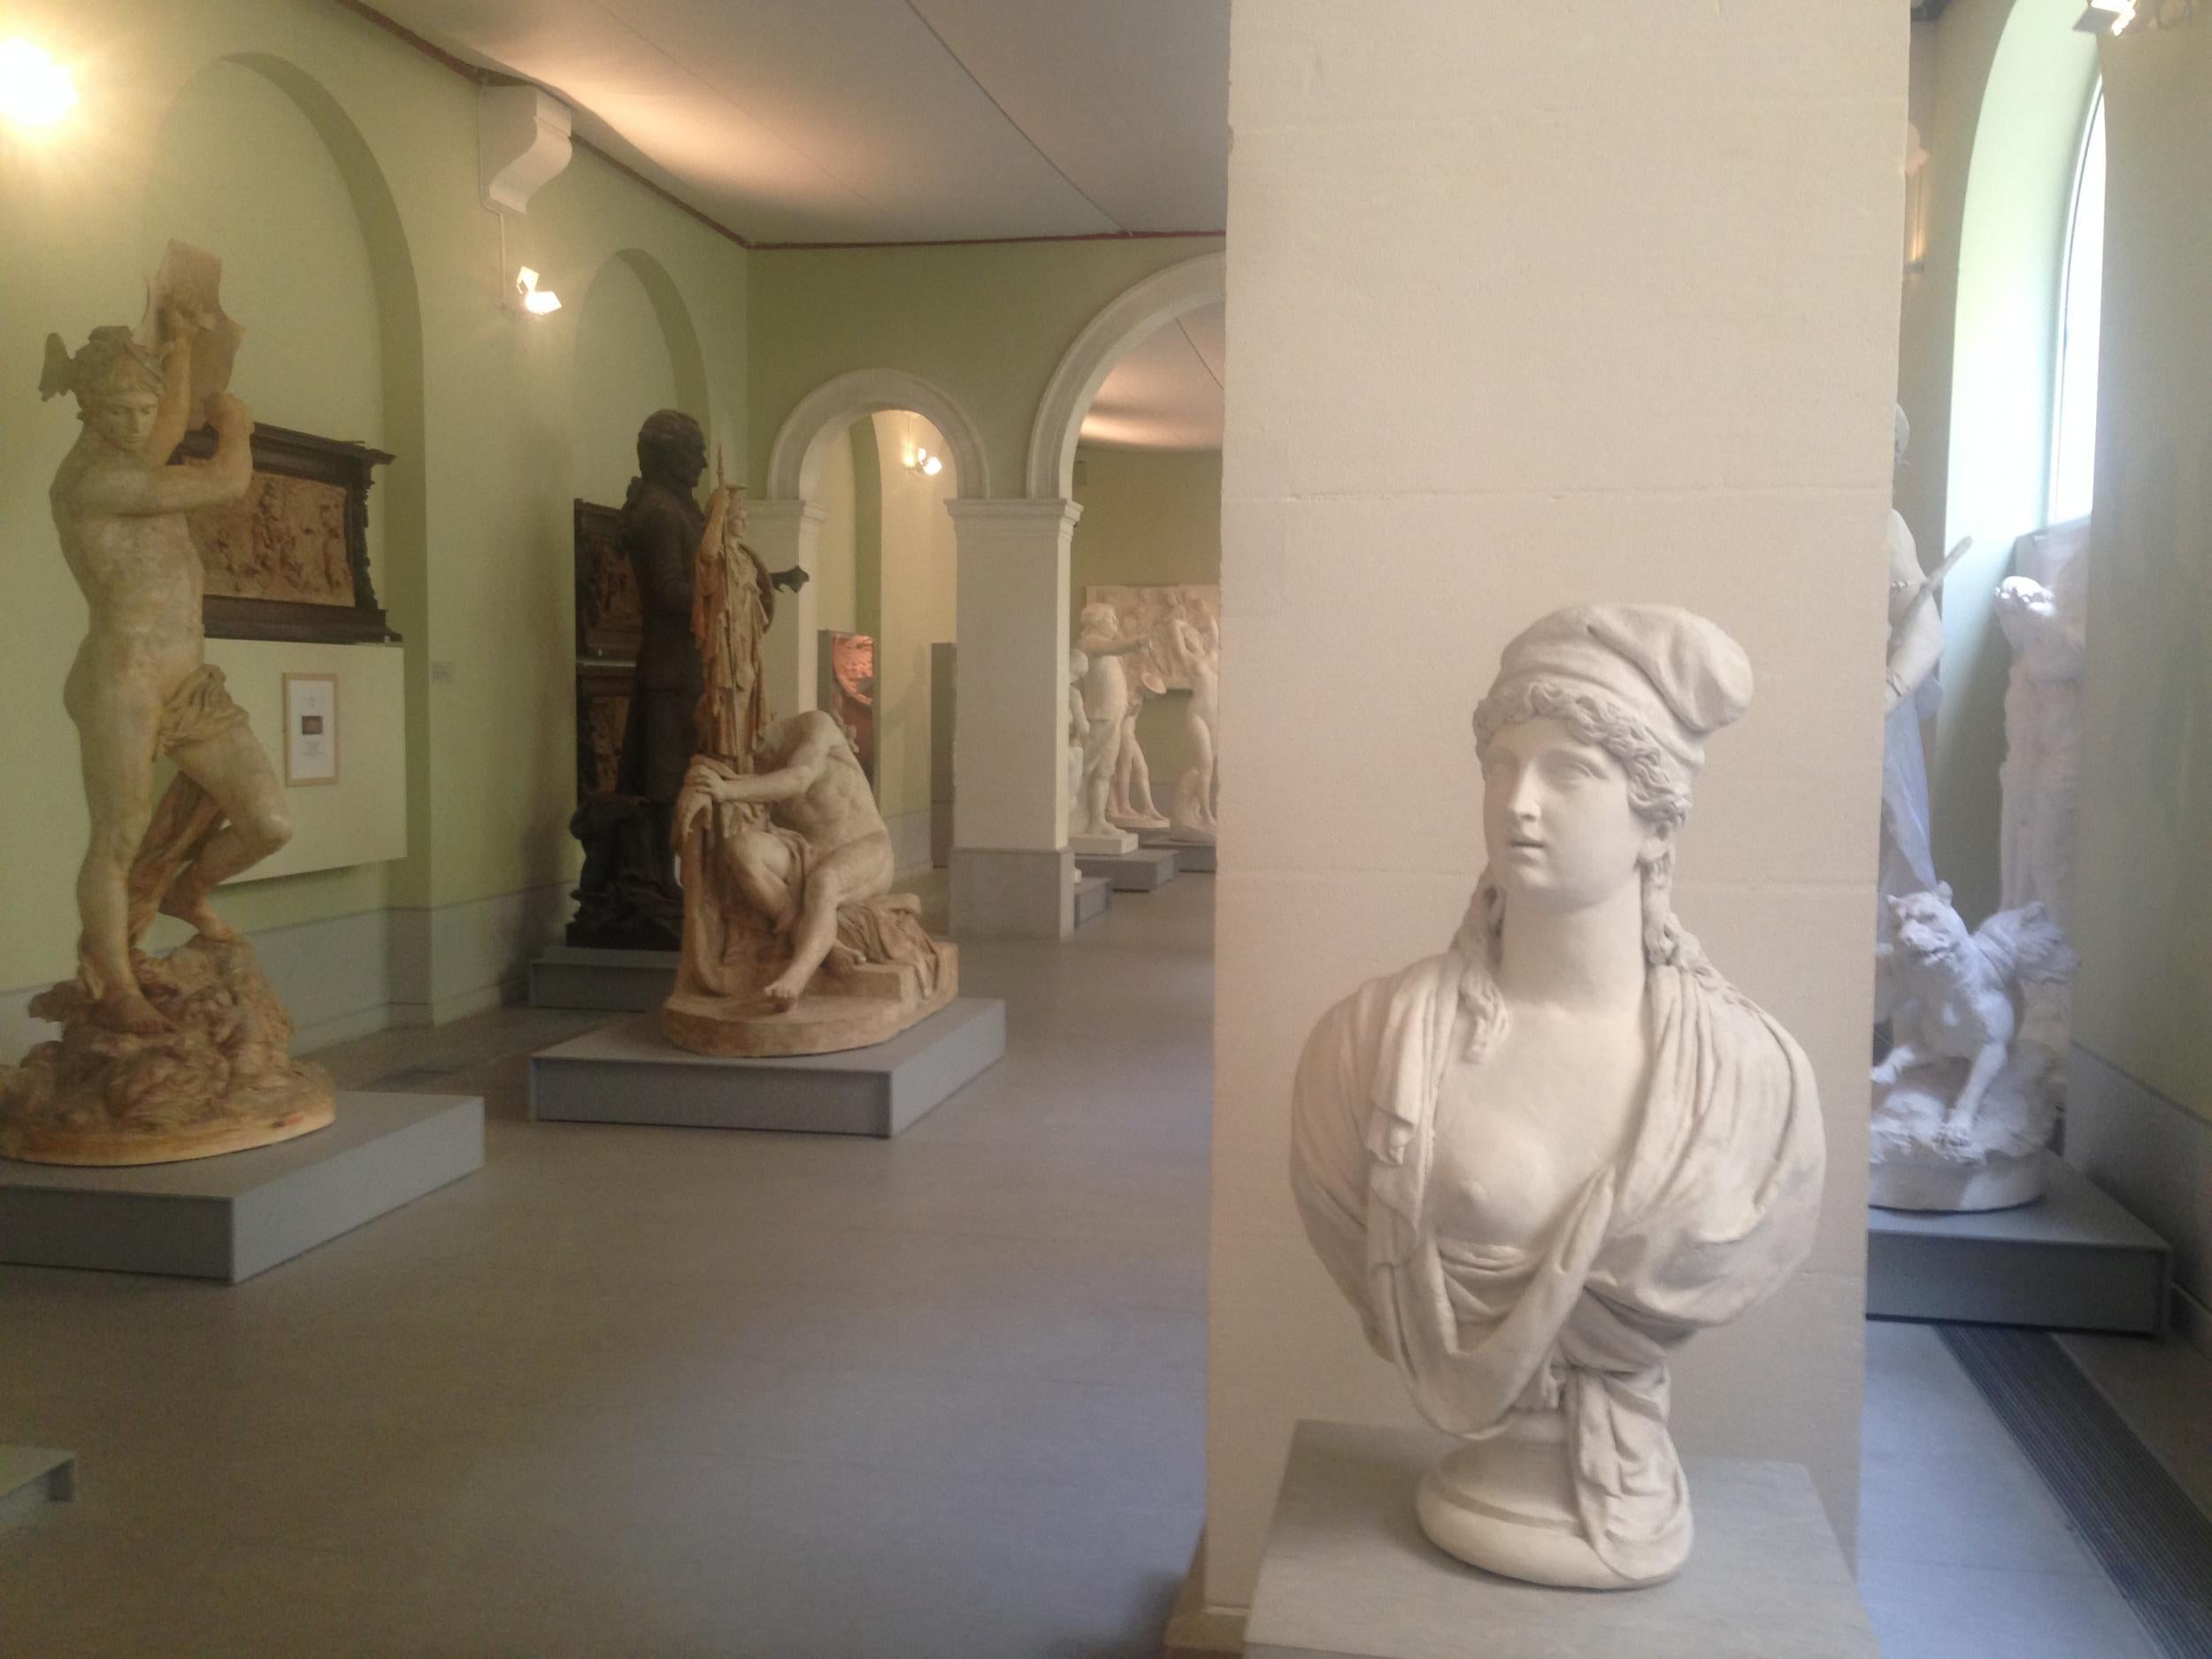 Sculpture club: exhibits at the Musée Granet